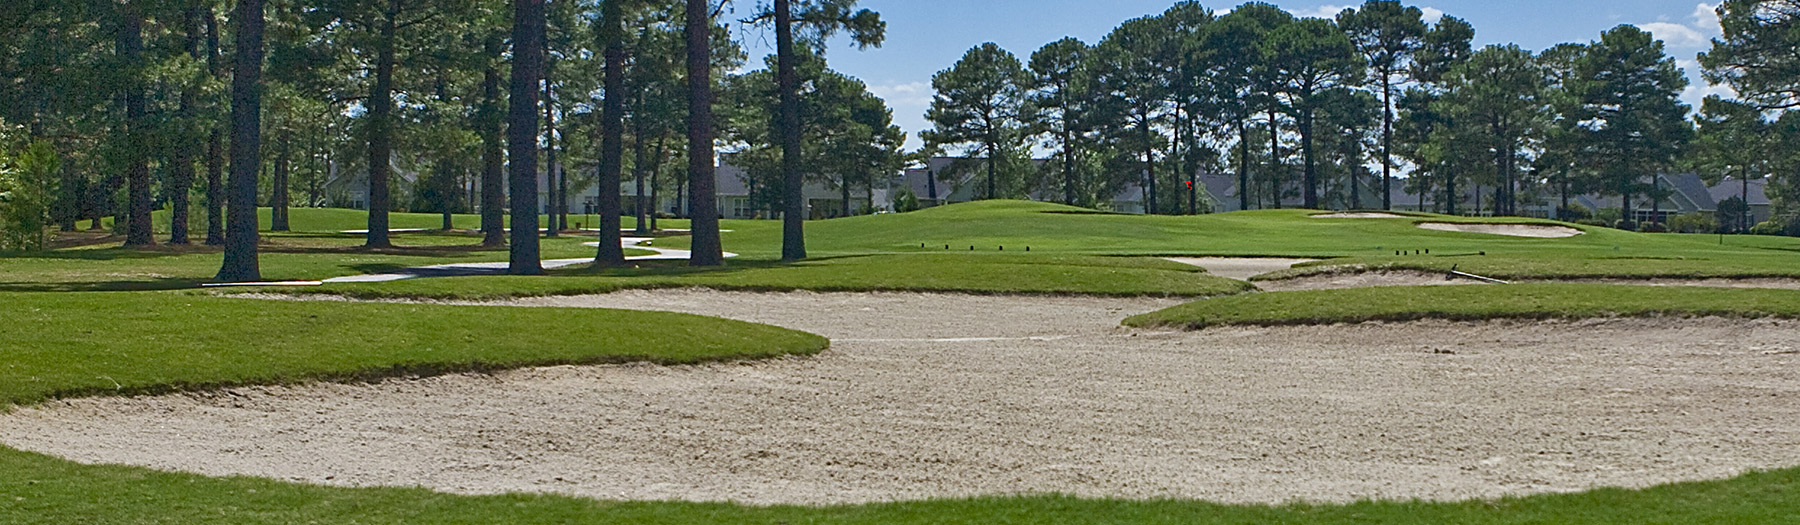 Myrtle Beach Golf Course